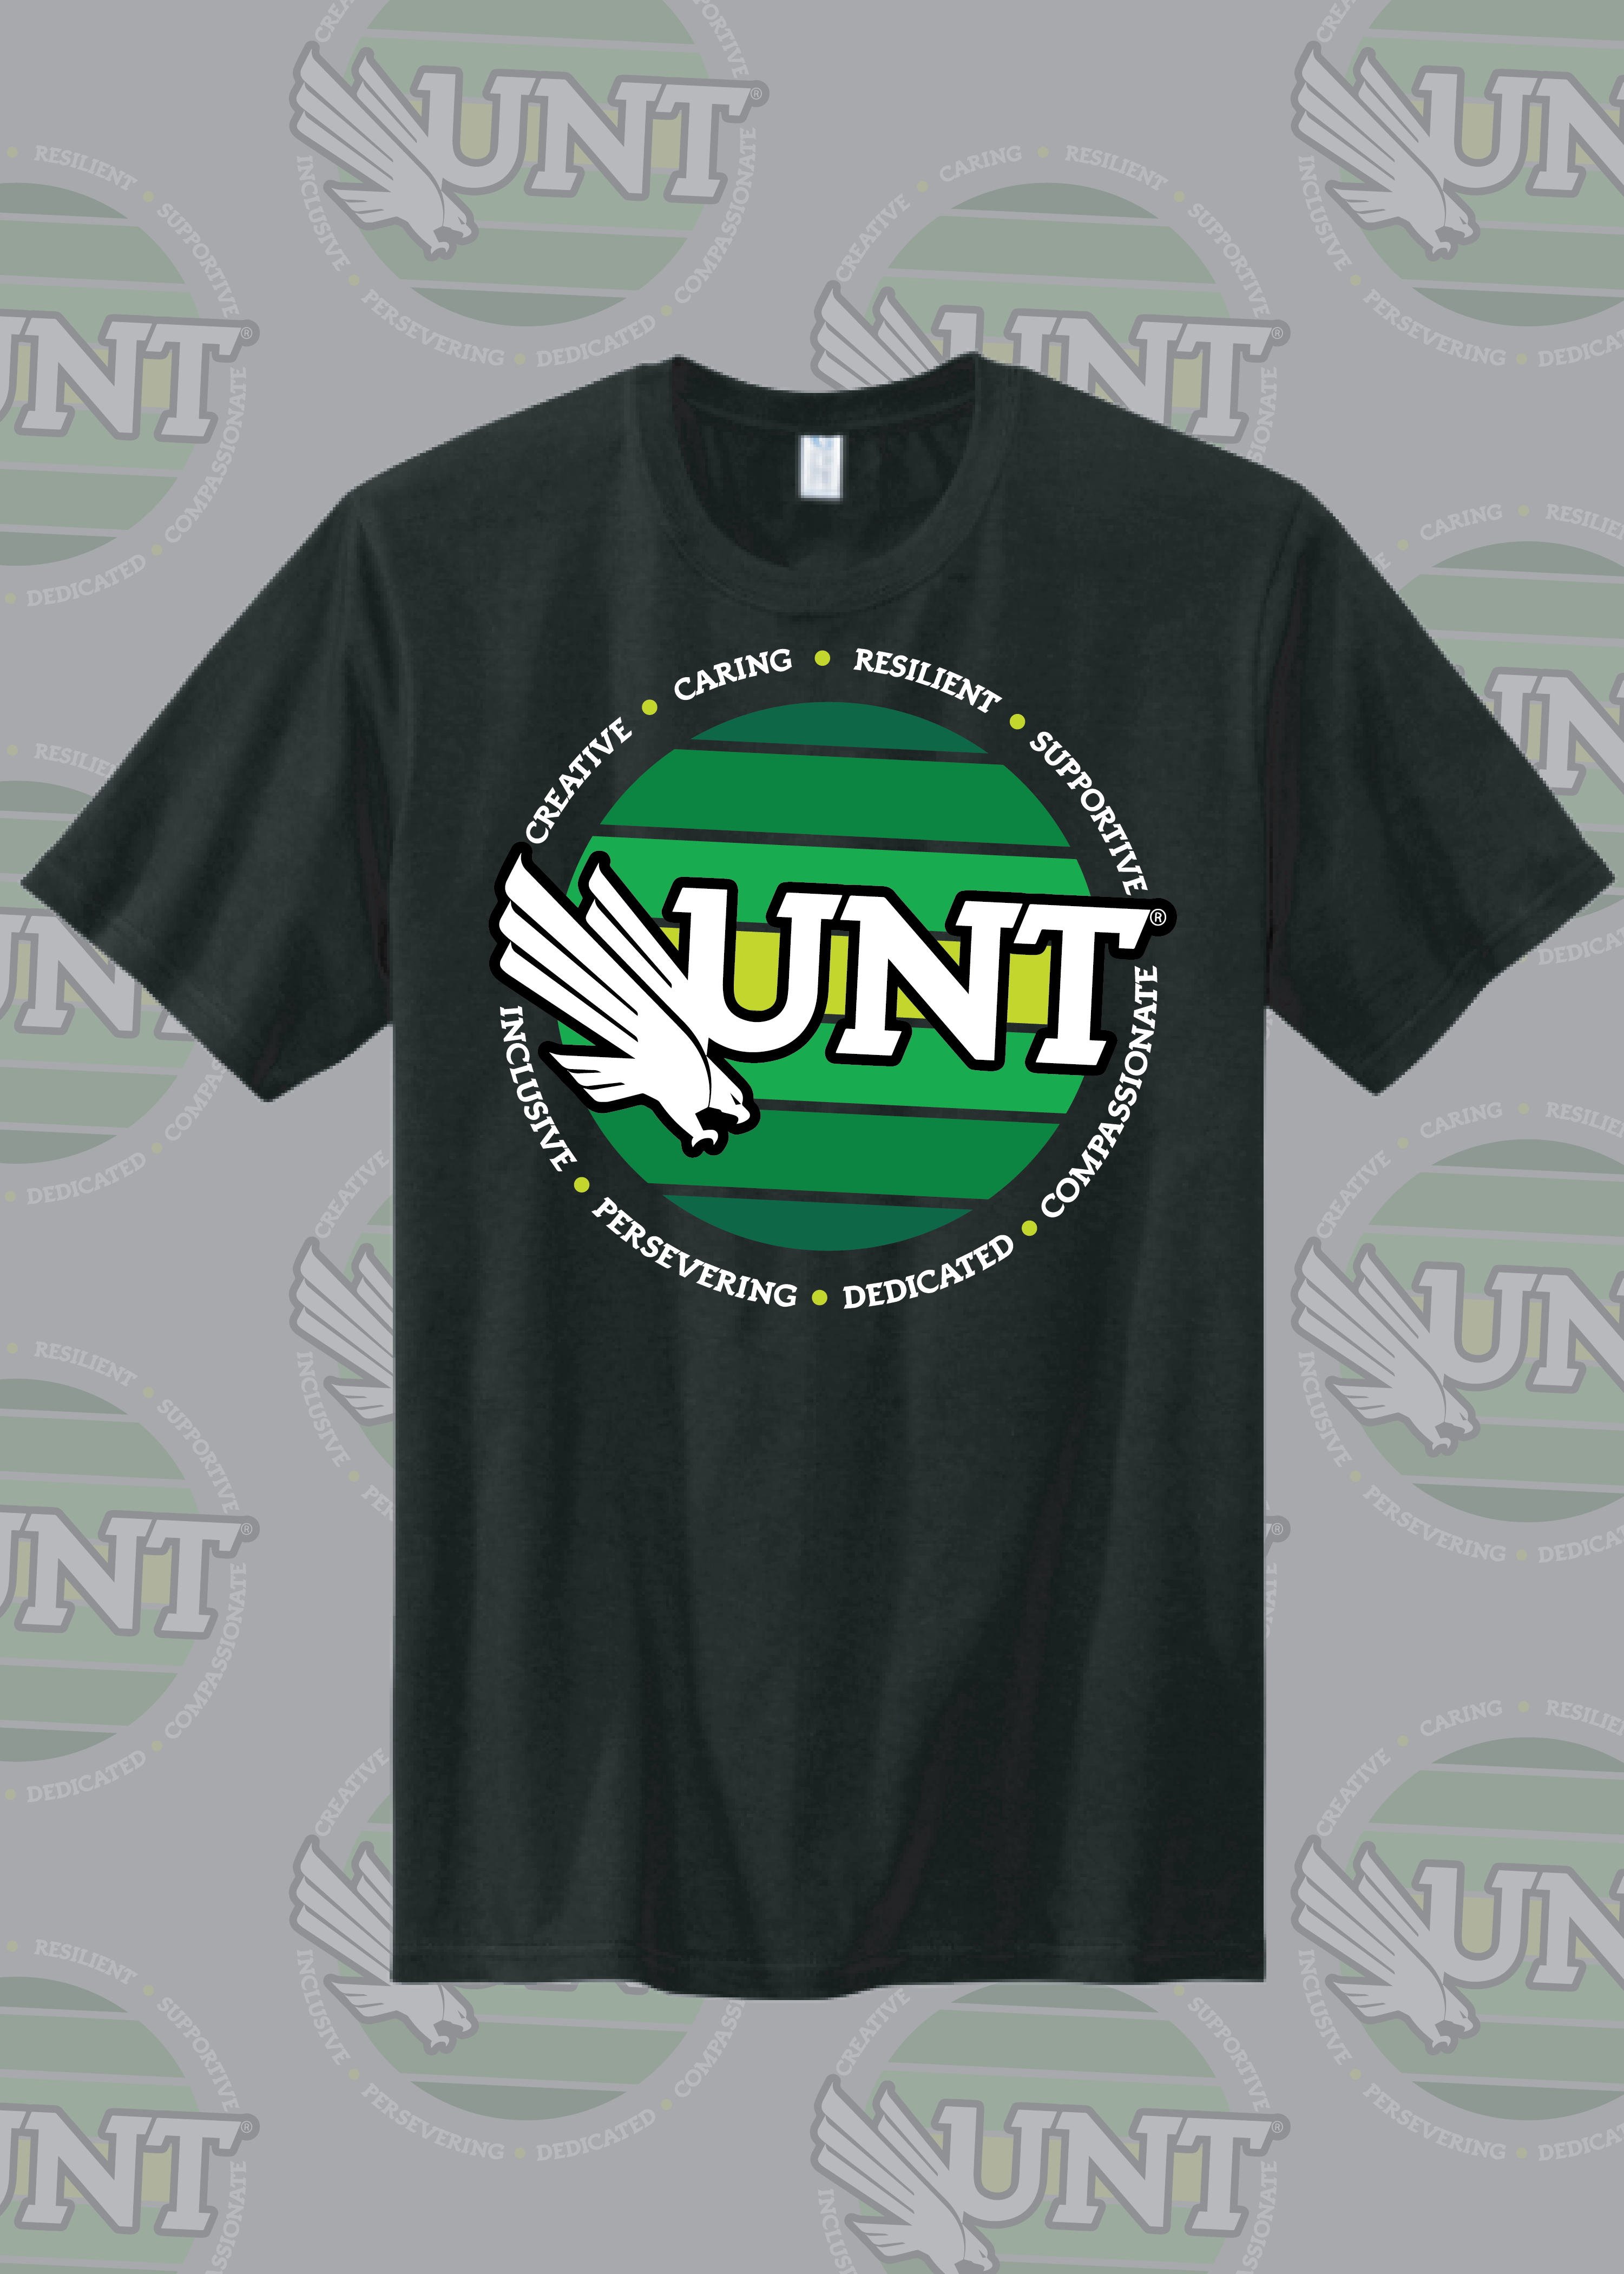 UNT Personality T-shirt - Large (L)